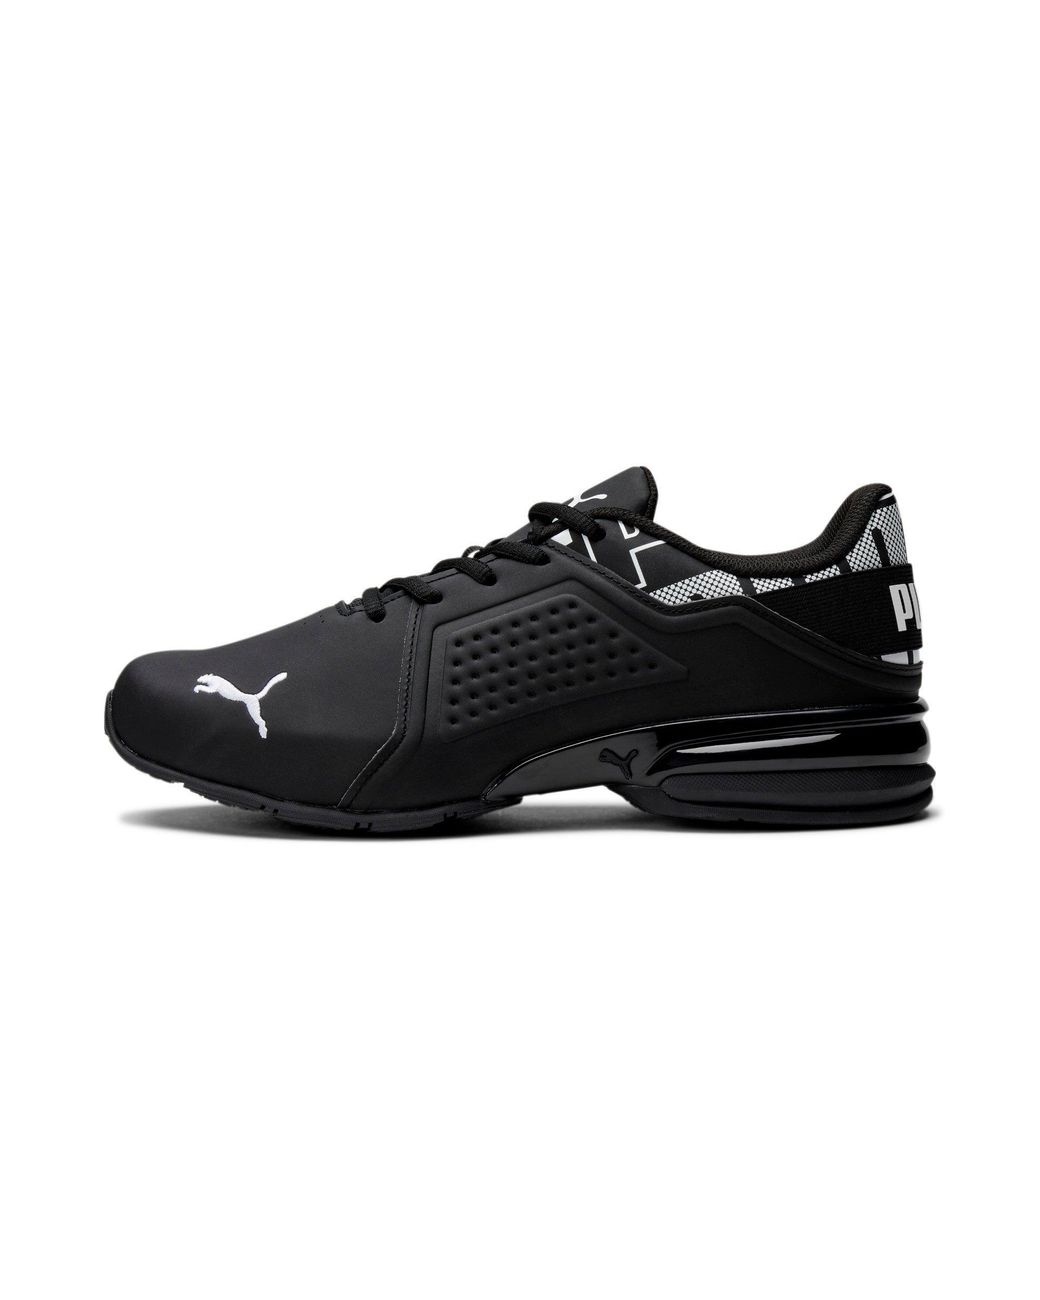 PUMA Viz Runner Repeat Running Sneakers in Black/White (Black) | Lyst